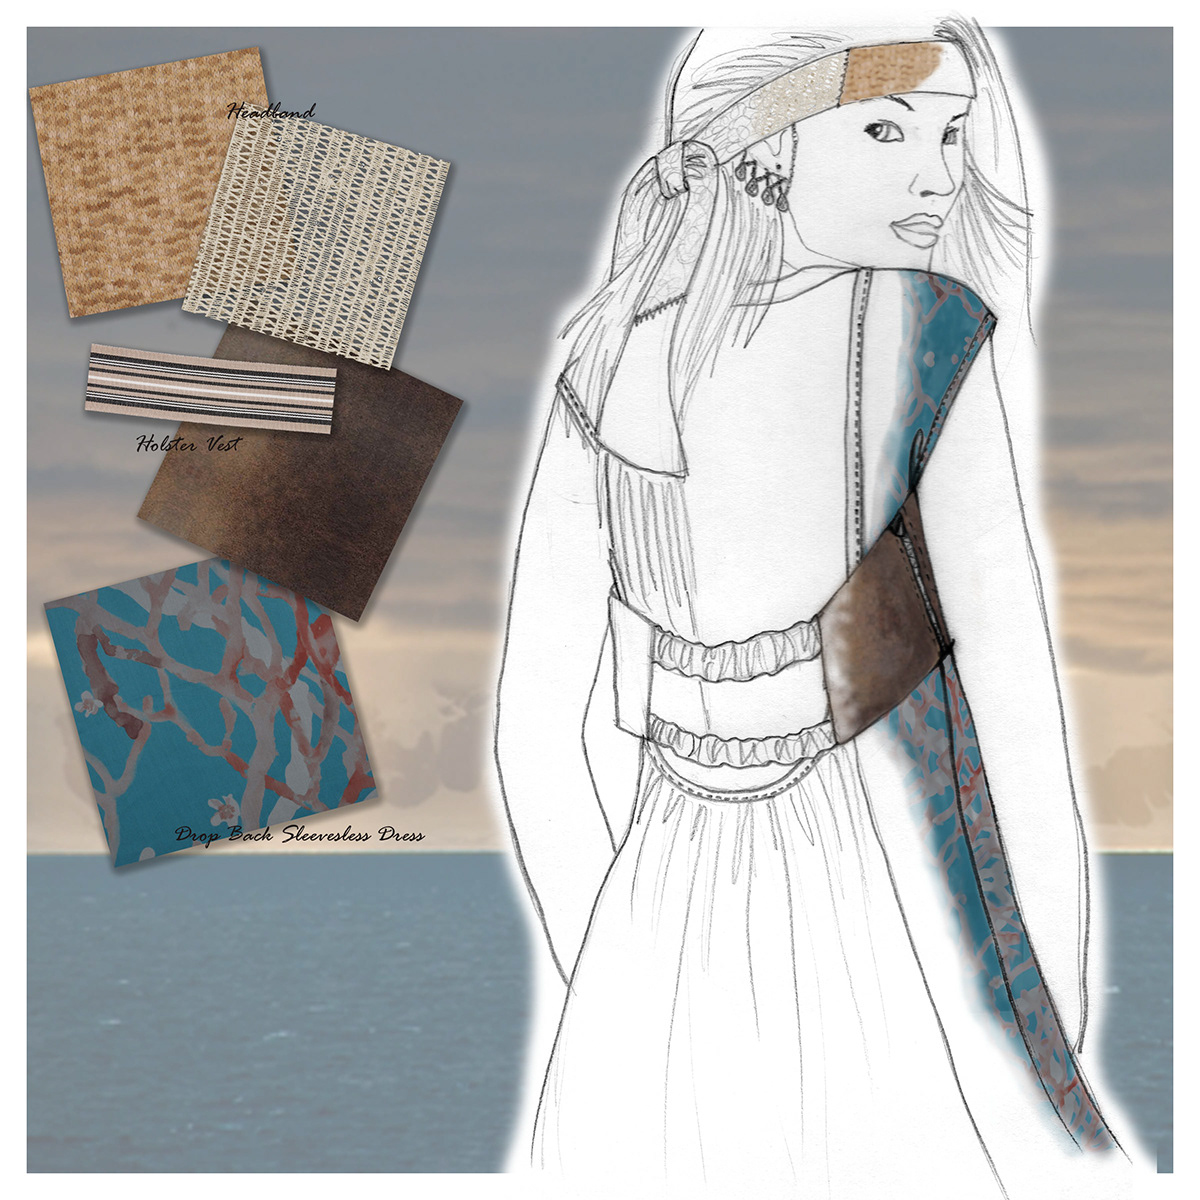 Peasant tribal costume sketch texture pattern apparel accessory design portfolio design journal